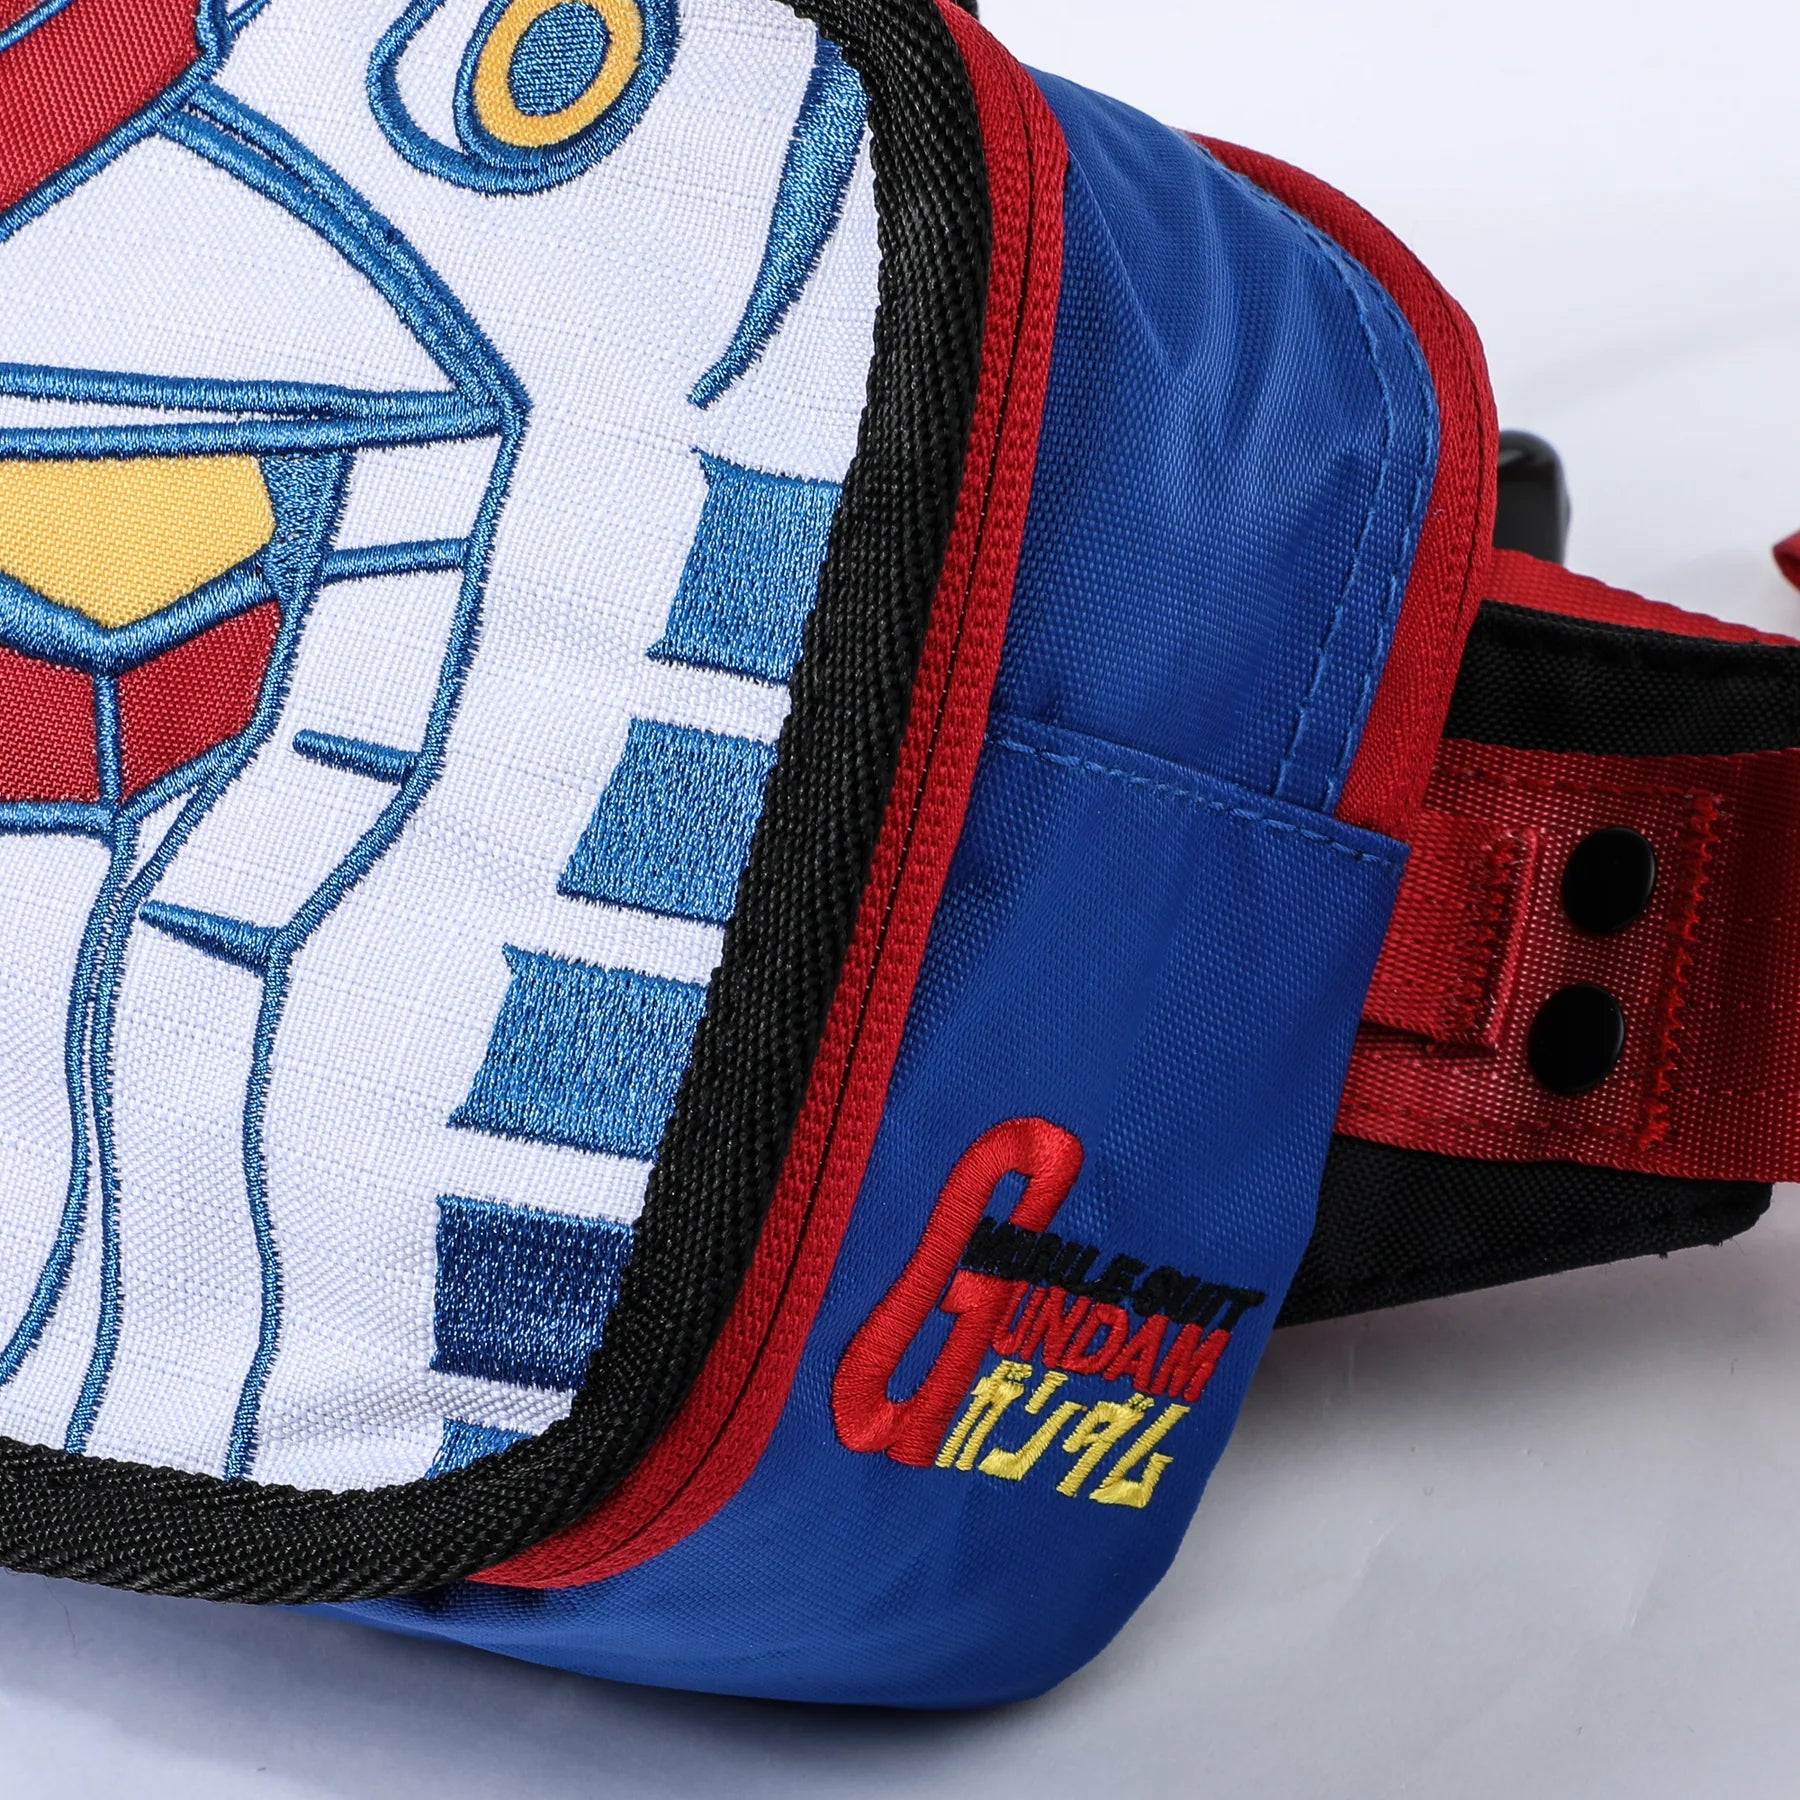 Gundam RX-78-2 Sling Bag Side Pocket View Wrap Around Zipper Strap Detail Embroidered 